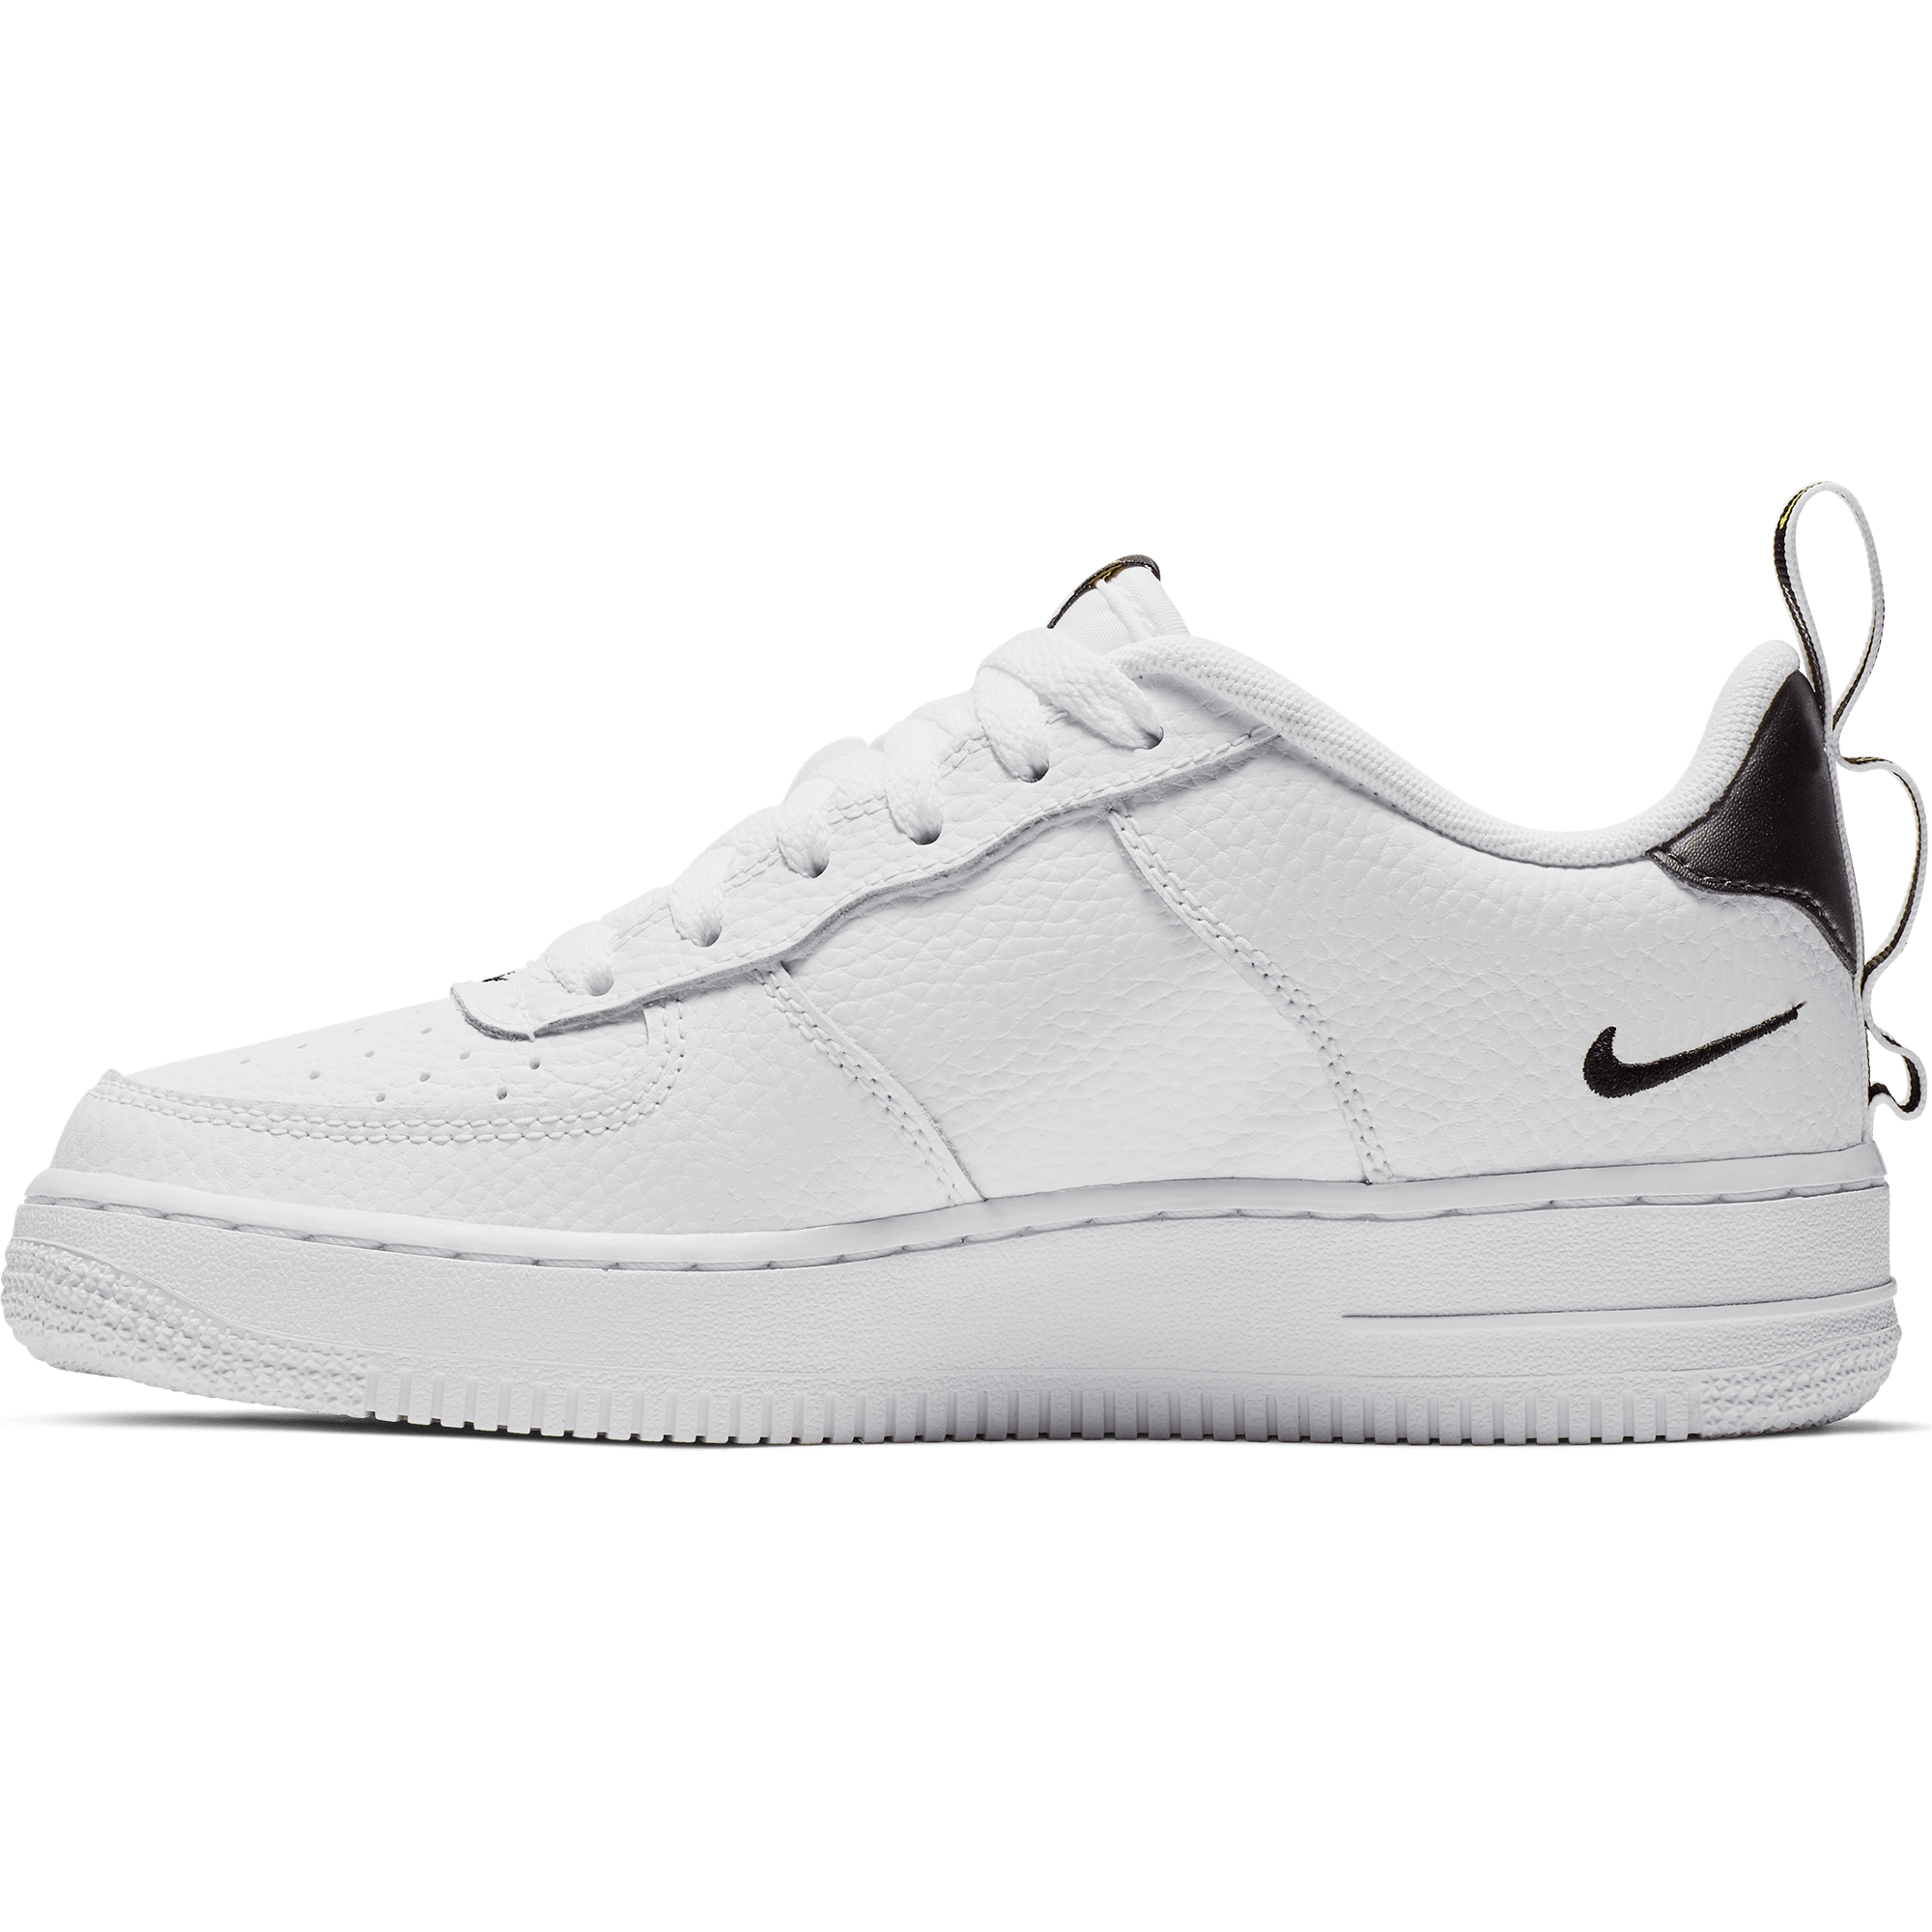 Nike Air Force 1 LV8 'Utility White